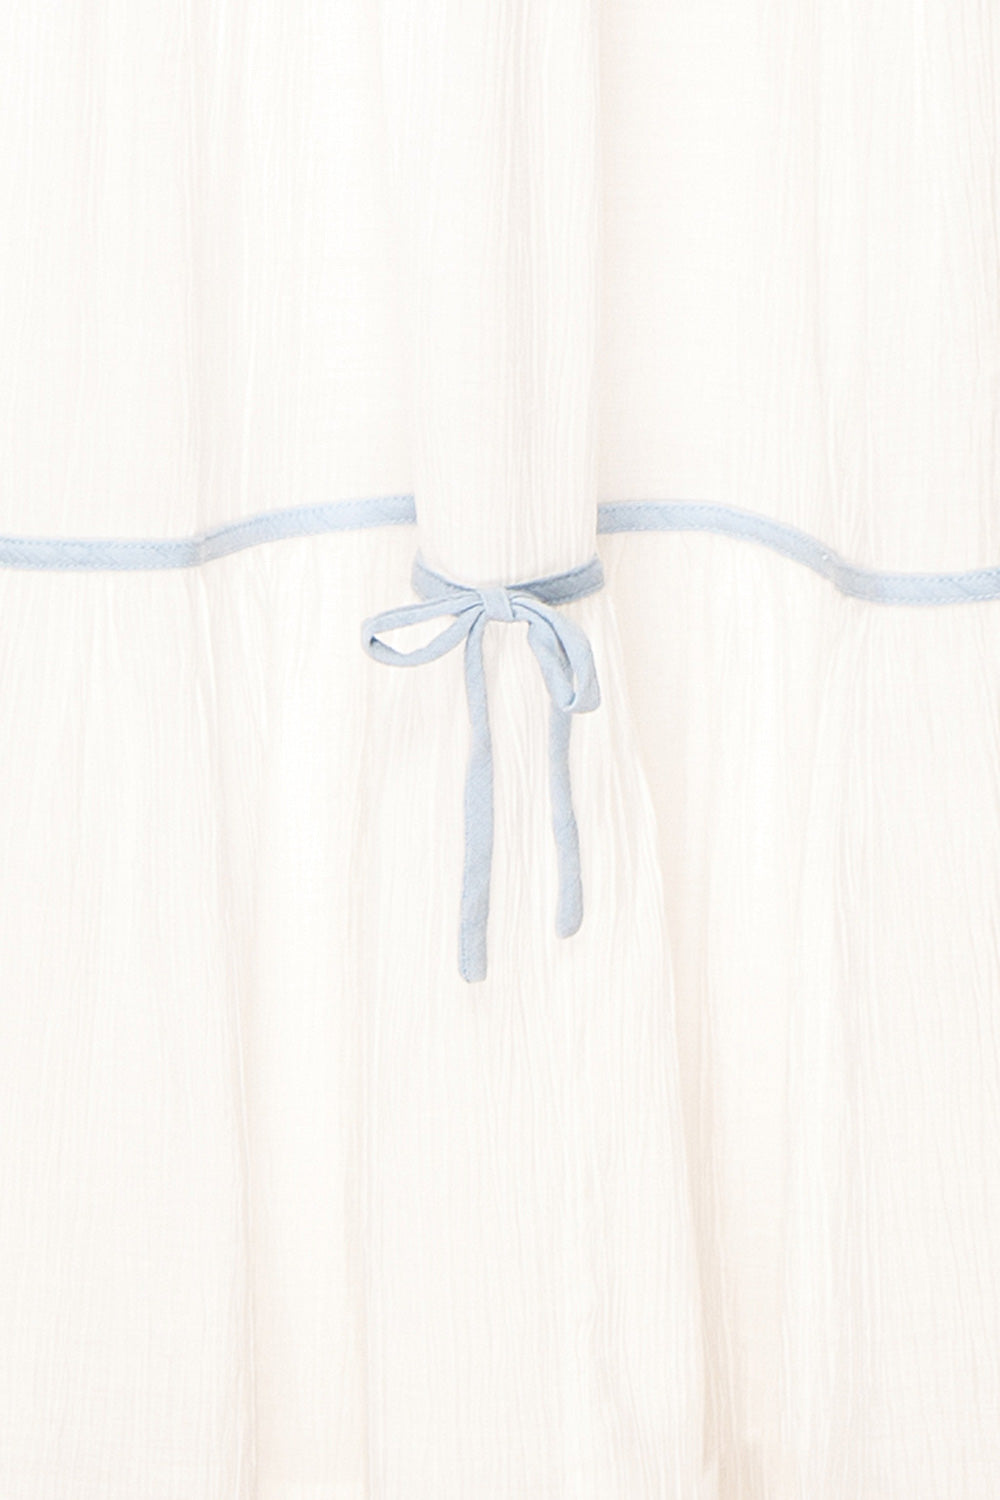 Juliriel White Midi Dress w/ Blue Ribbons | Boutique 1861 texture